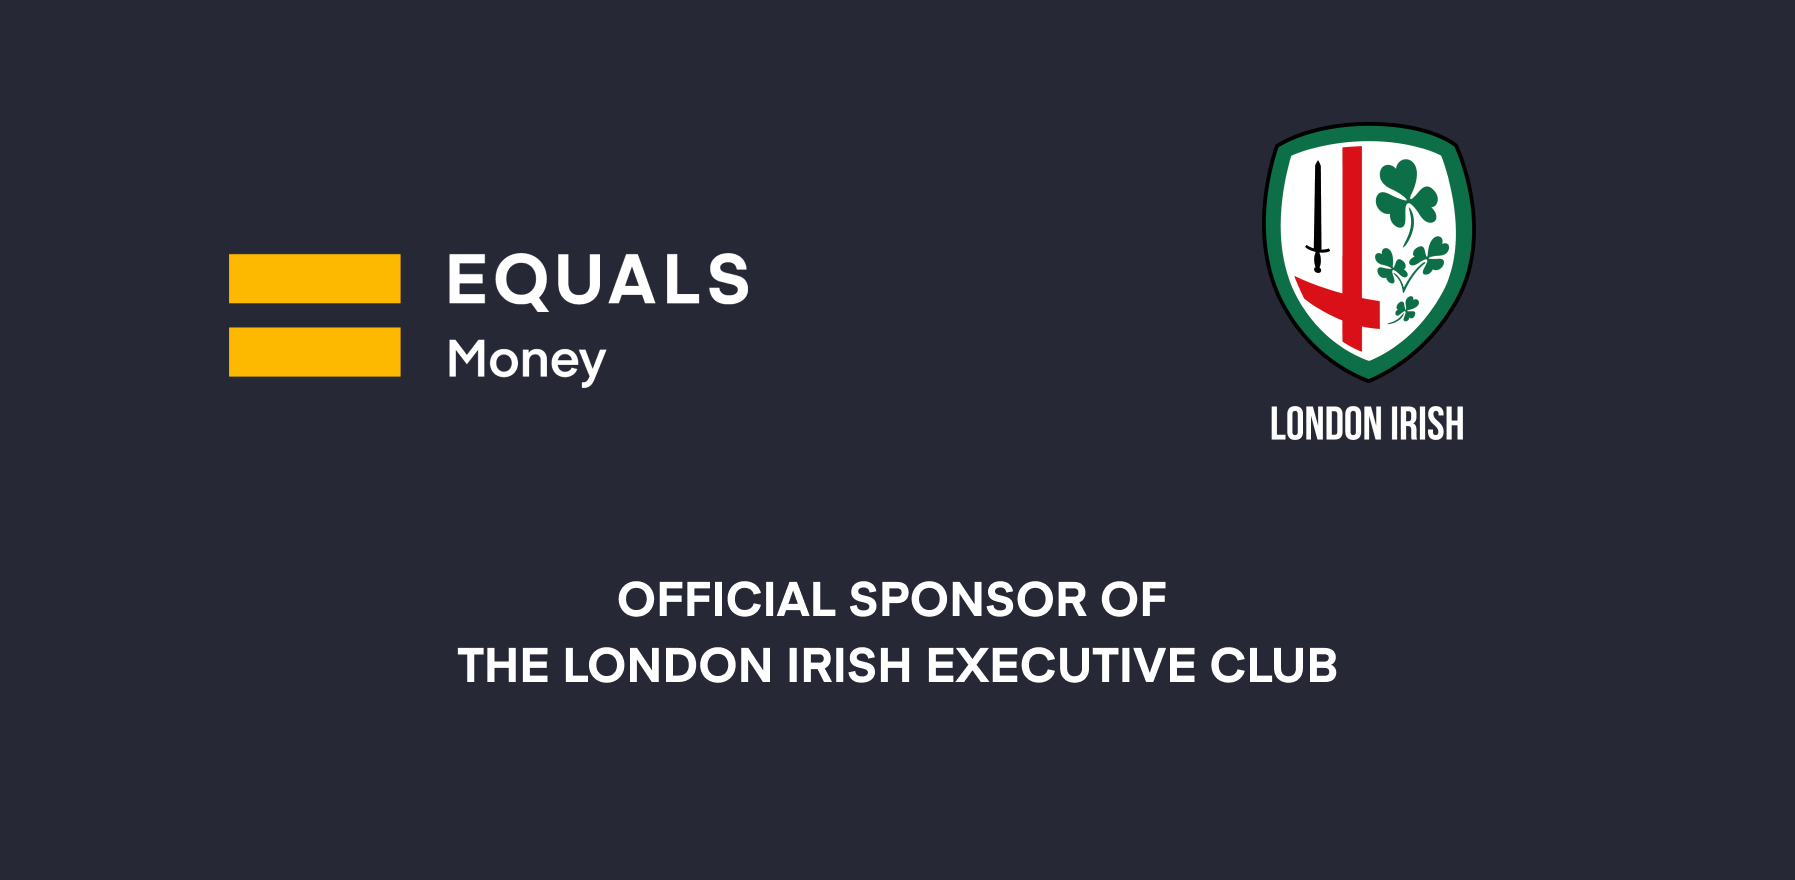 Equals Money teams up with London Irish